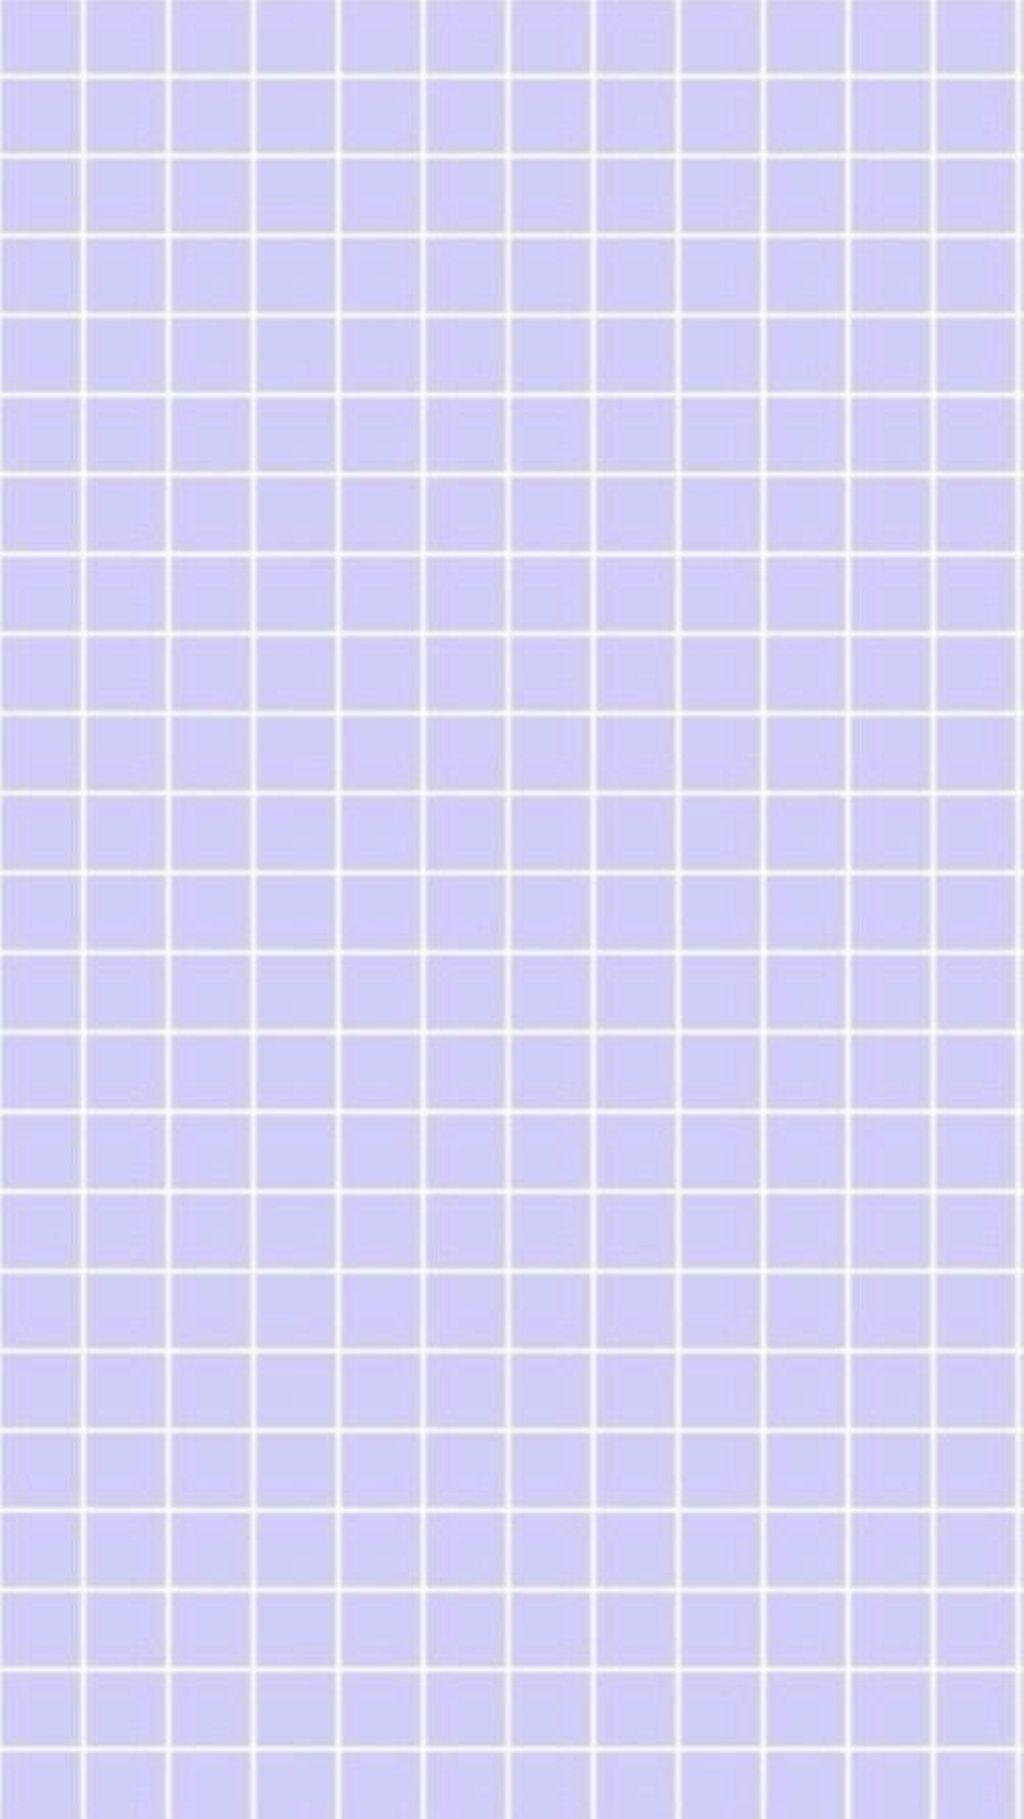 Blue and Purple Aesthetic Wallpapers - Top Những Hình Ảnh Đẹp